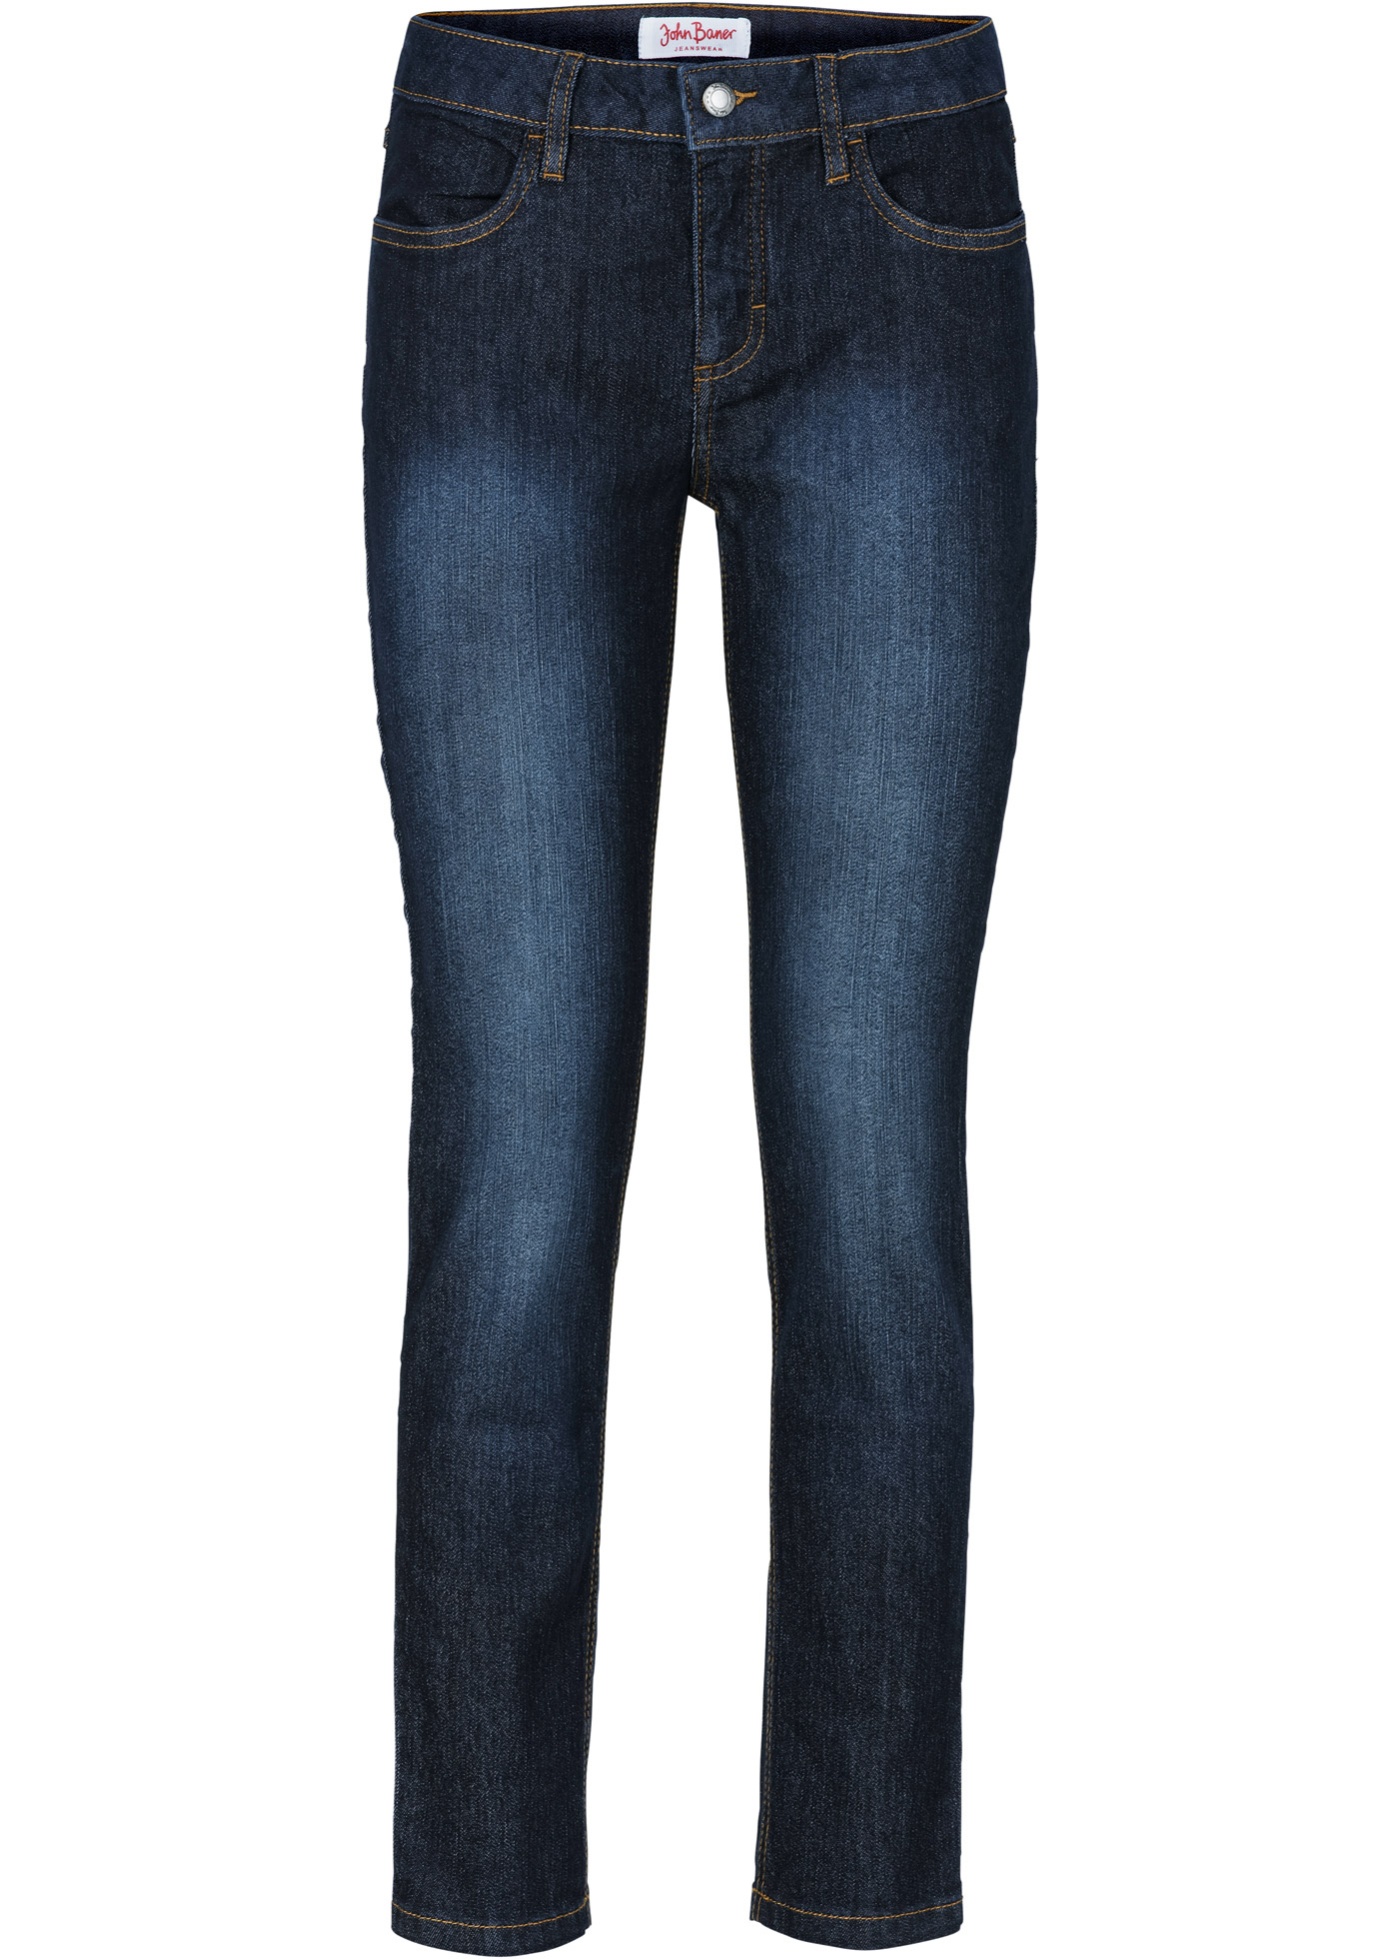 Bonprix - 7/8 jeans 199.00